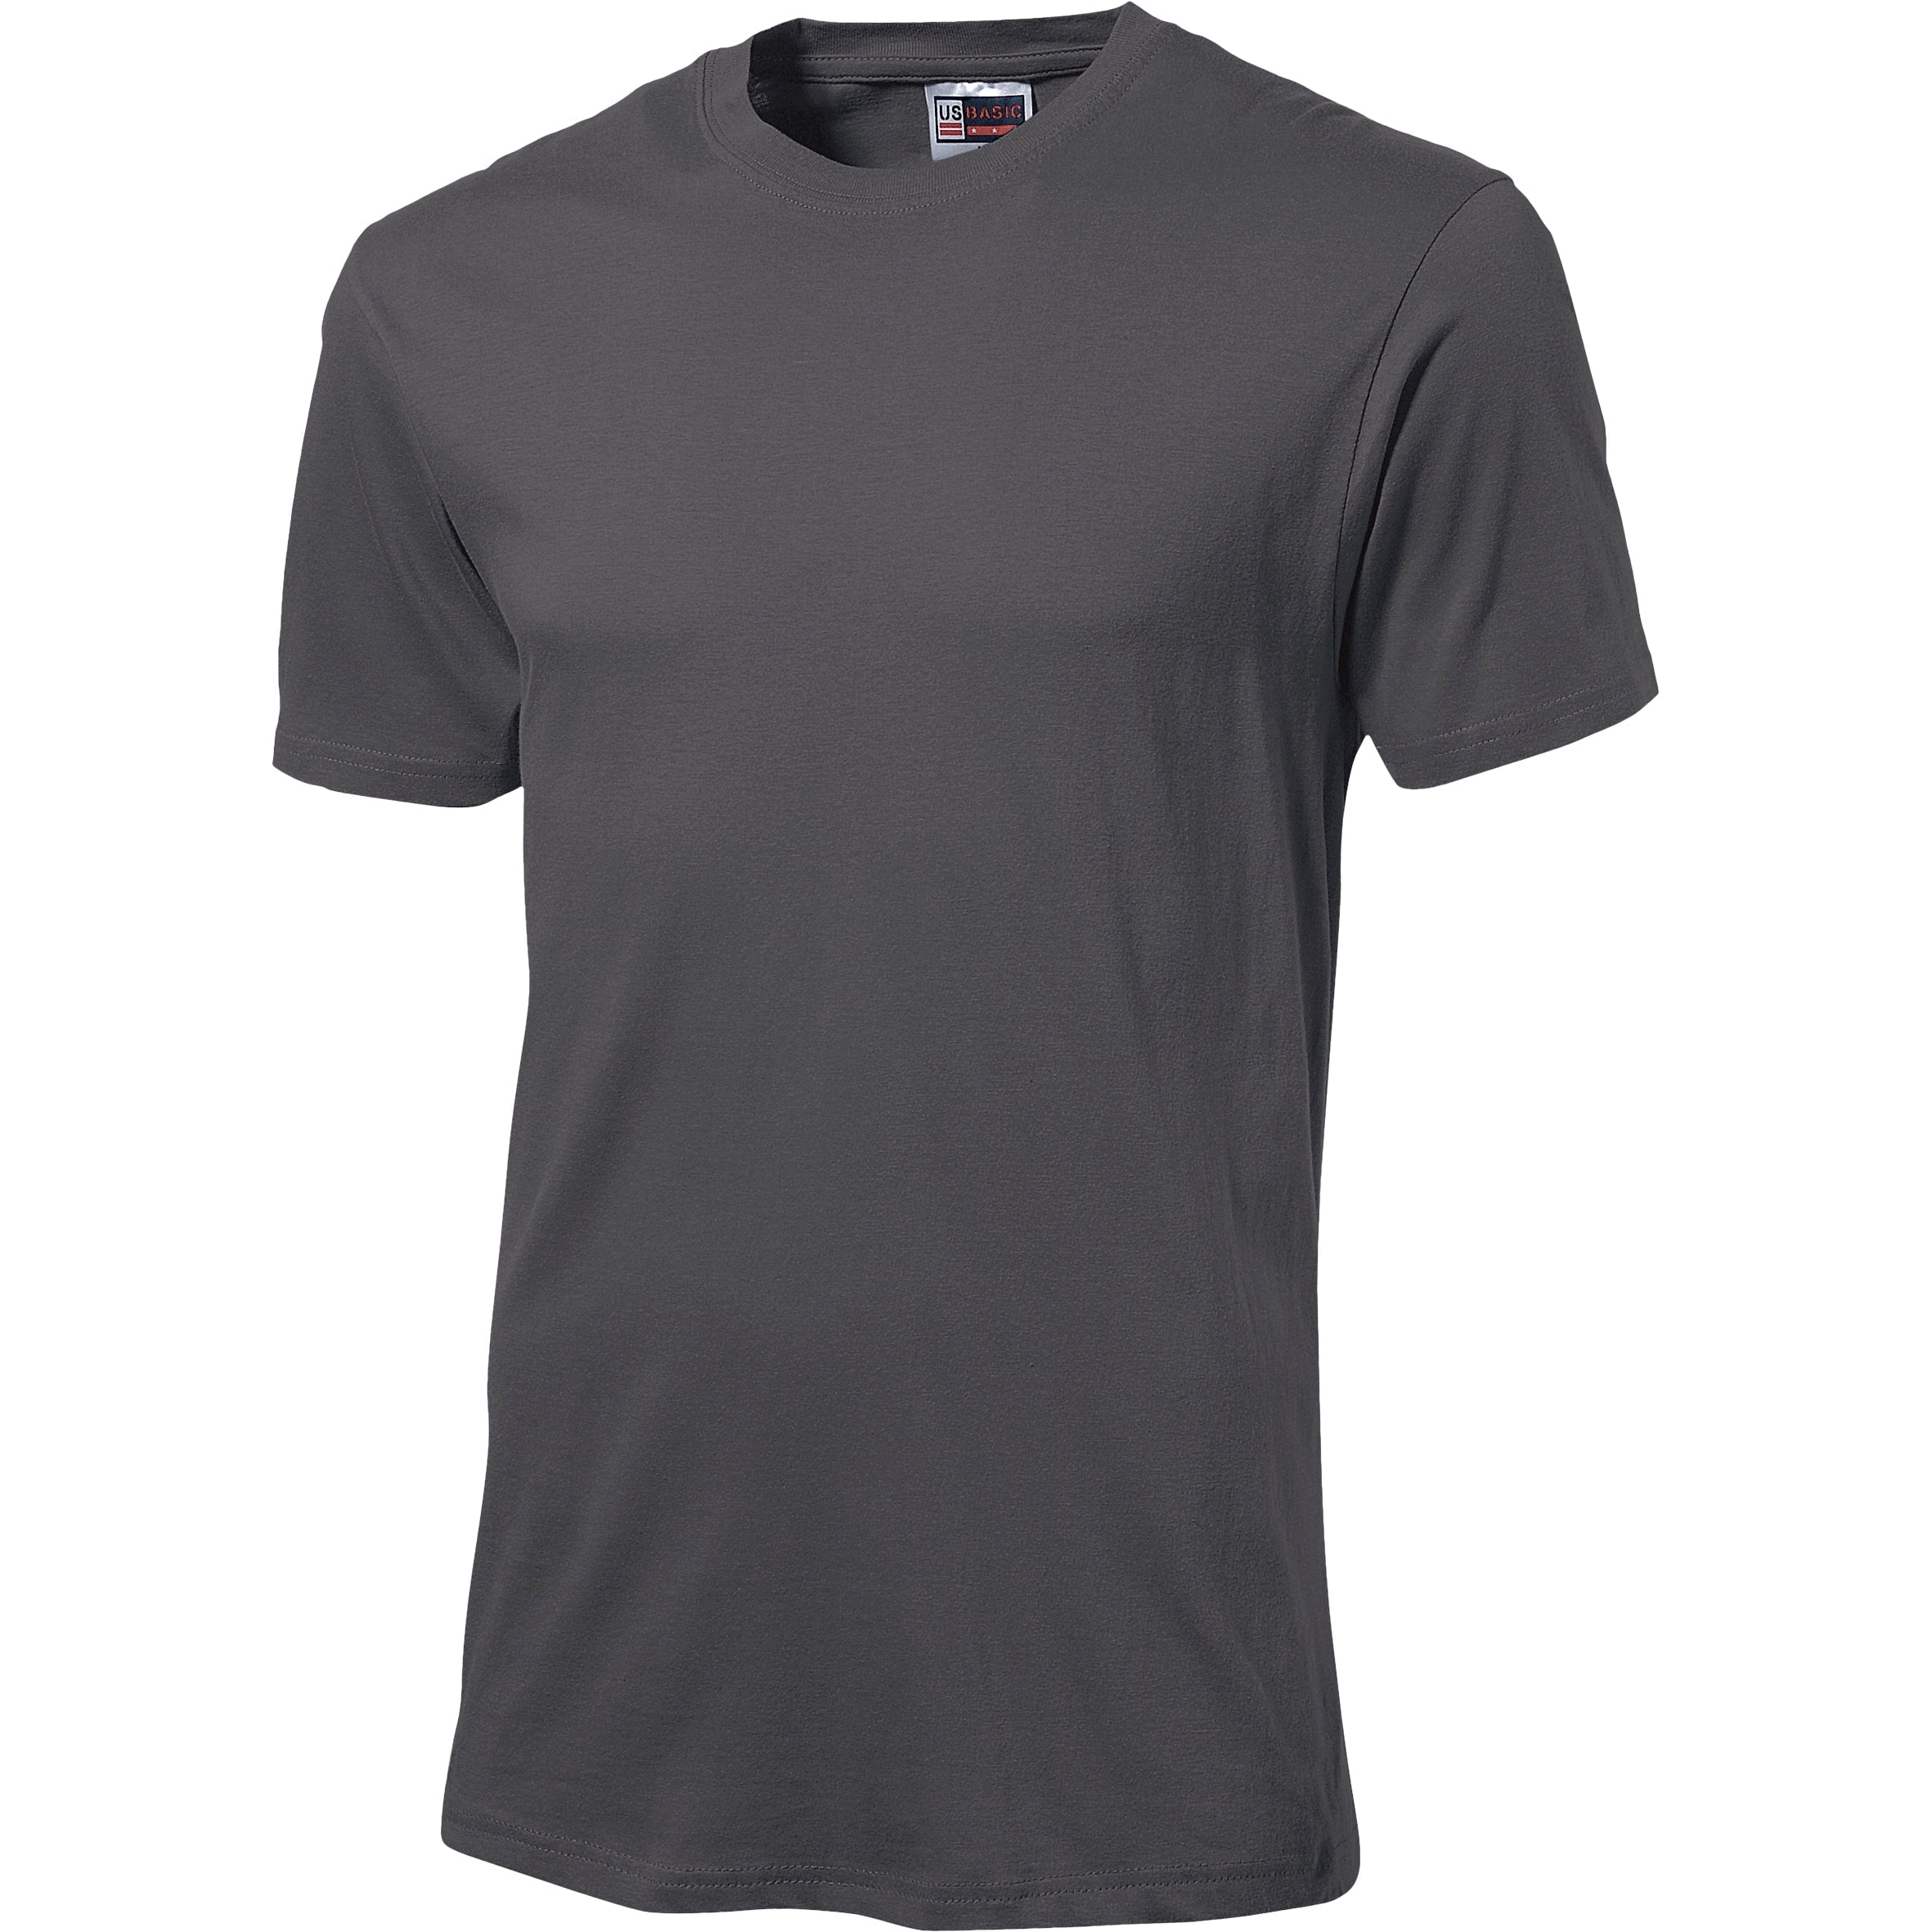 Unisex Super Club 165 T-Shirt-2XL-Dark Grey-DG2